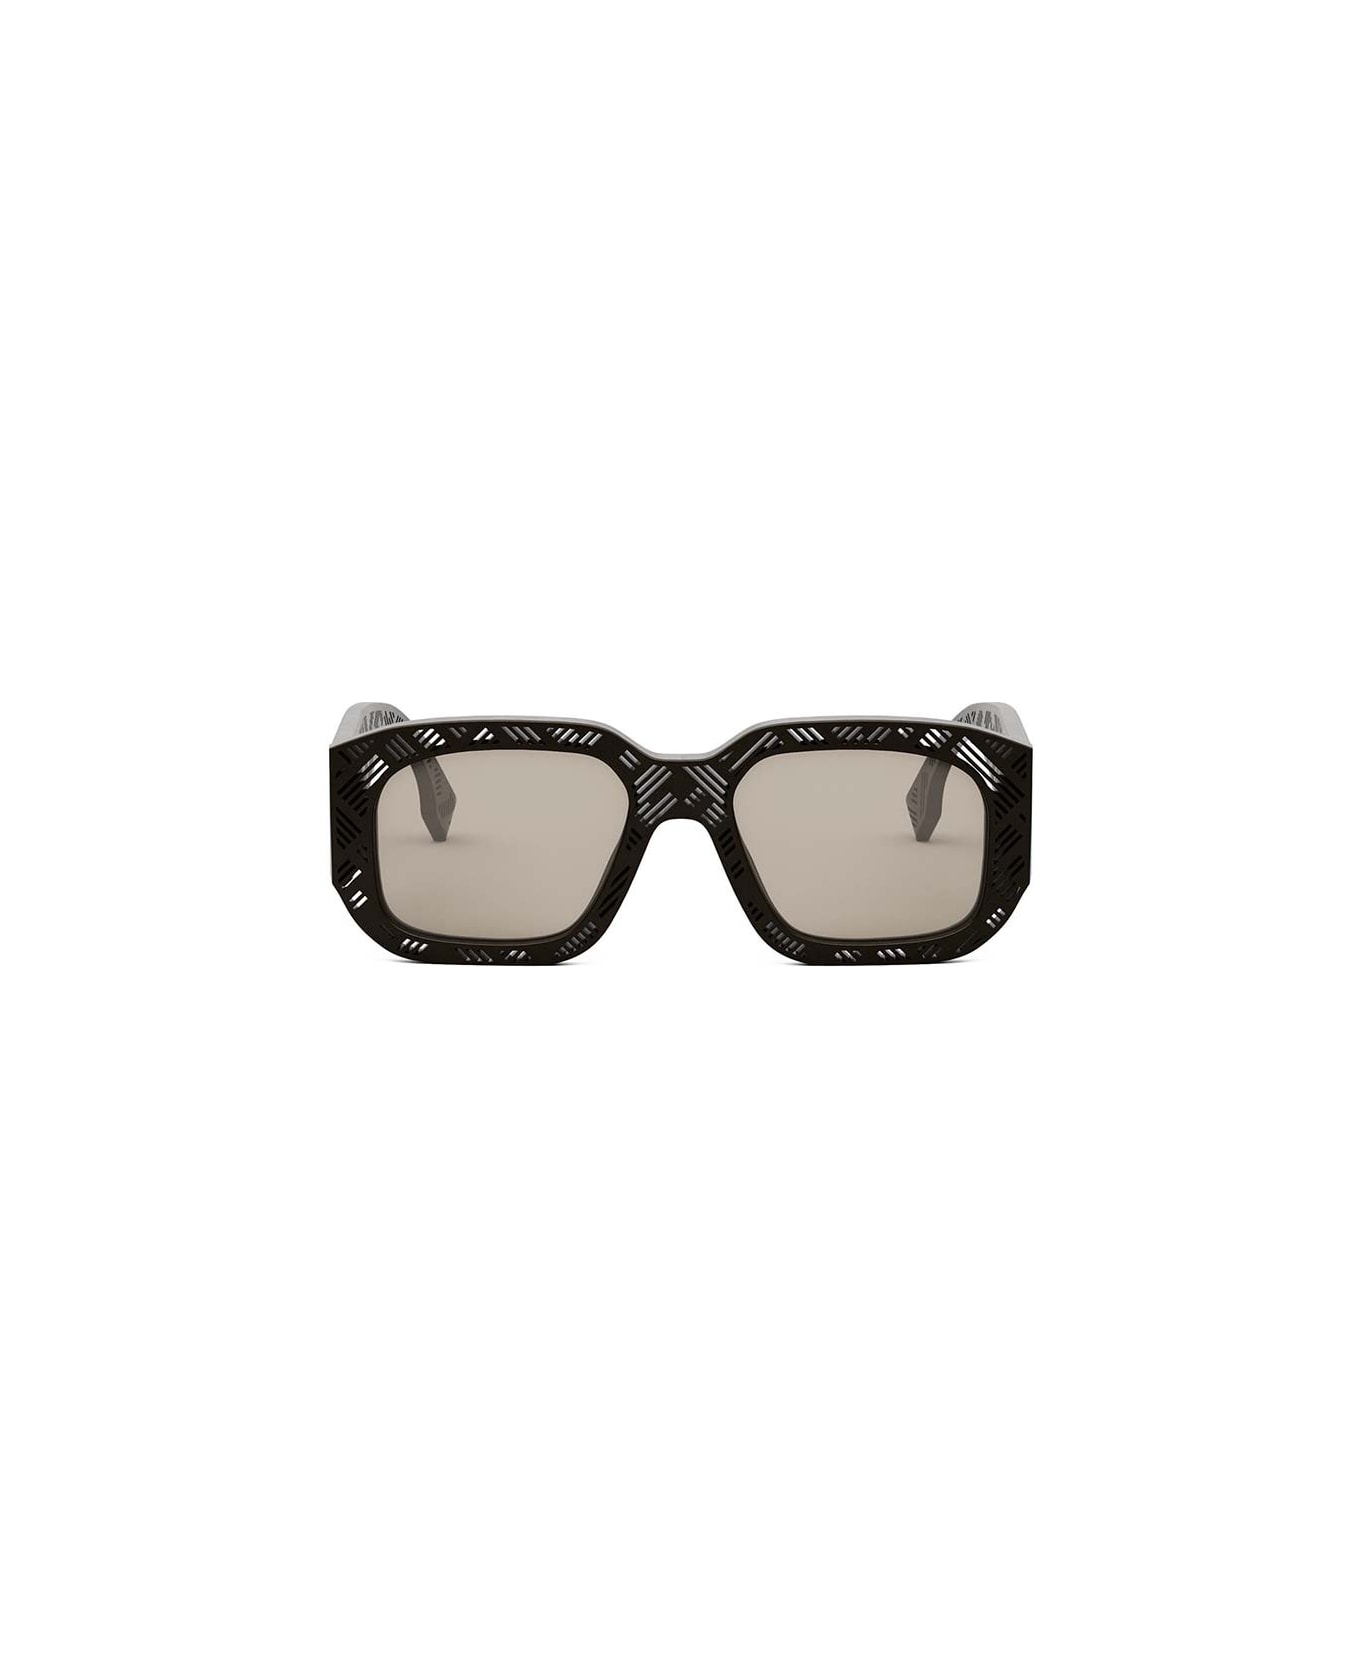 Fendi Eyewear Sunglasses - Marrone/Marrone chiaro